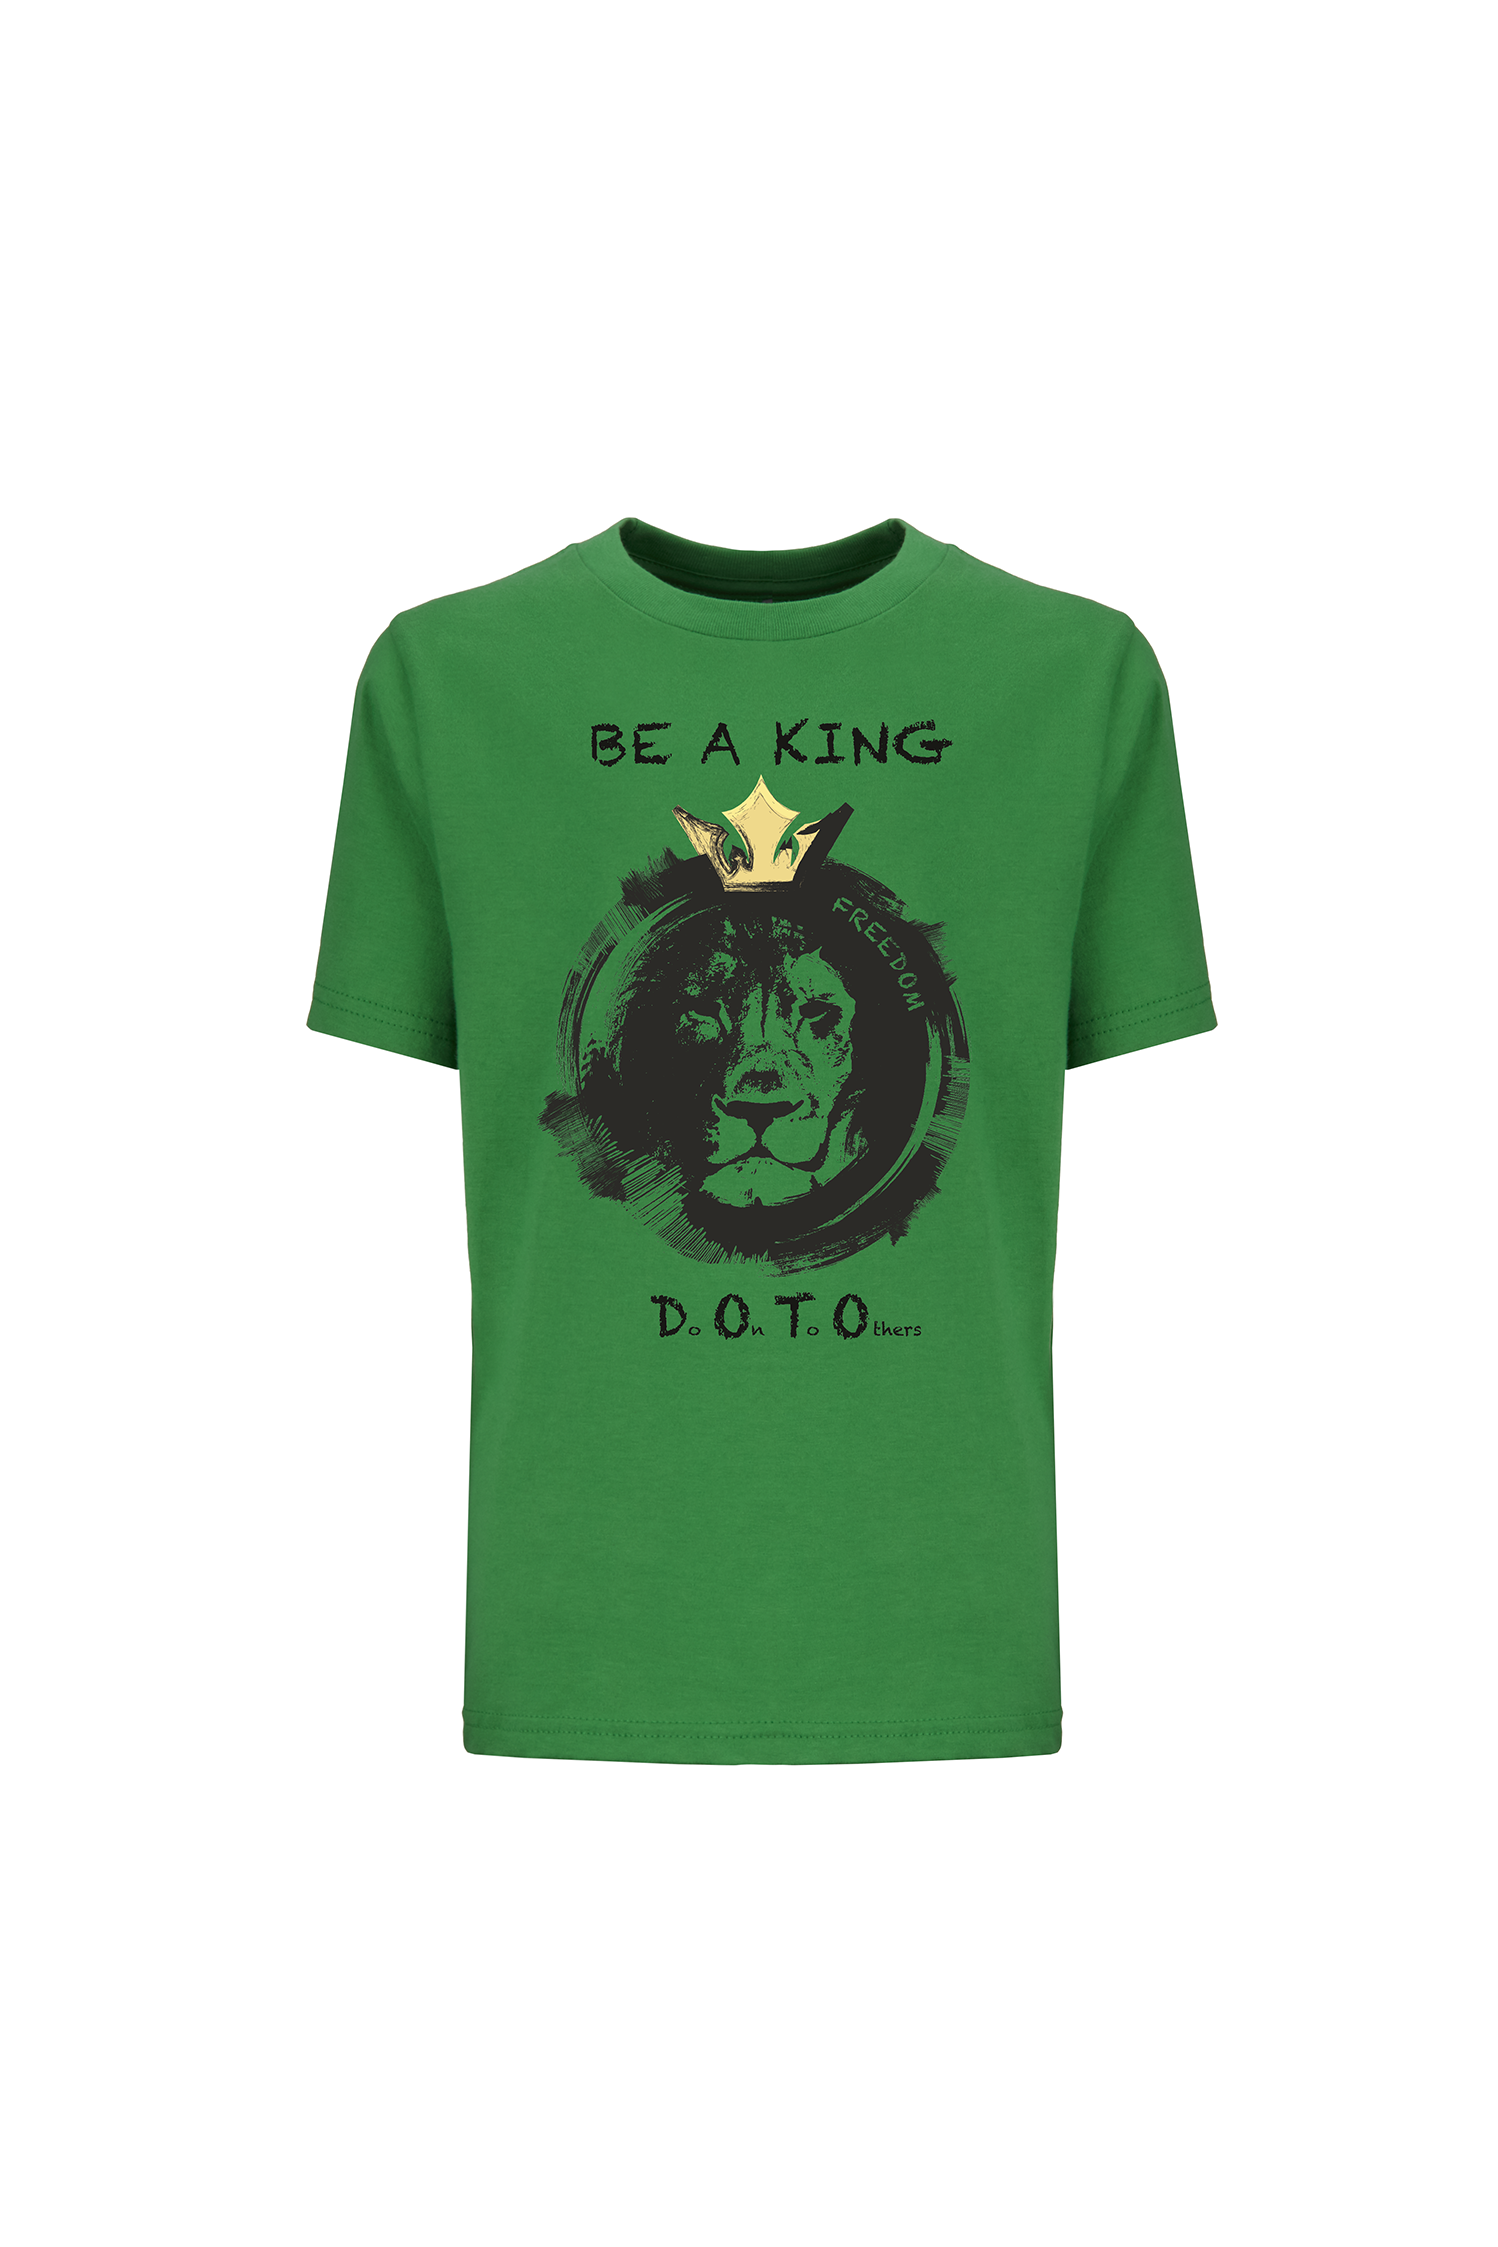 Be A King - Green Boy's short sleeve Tee